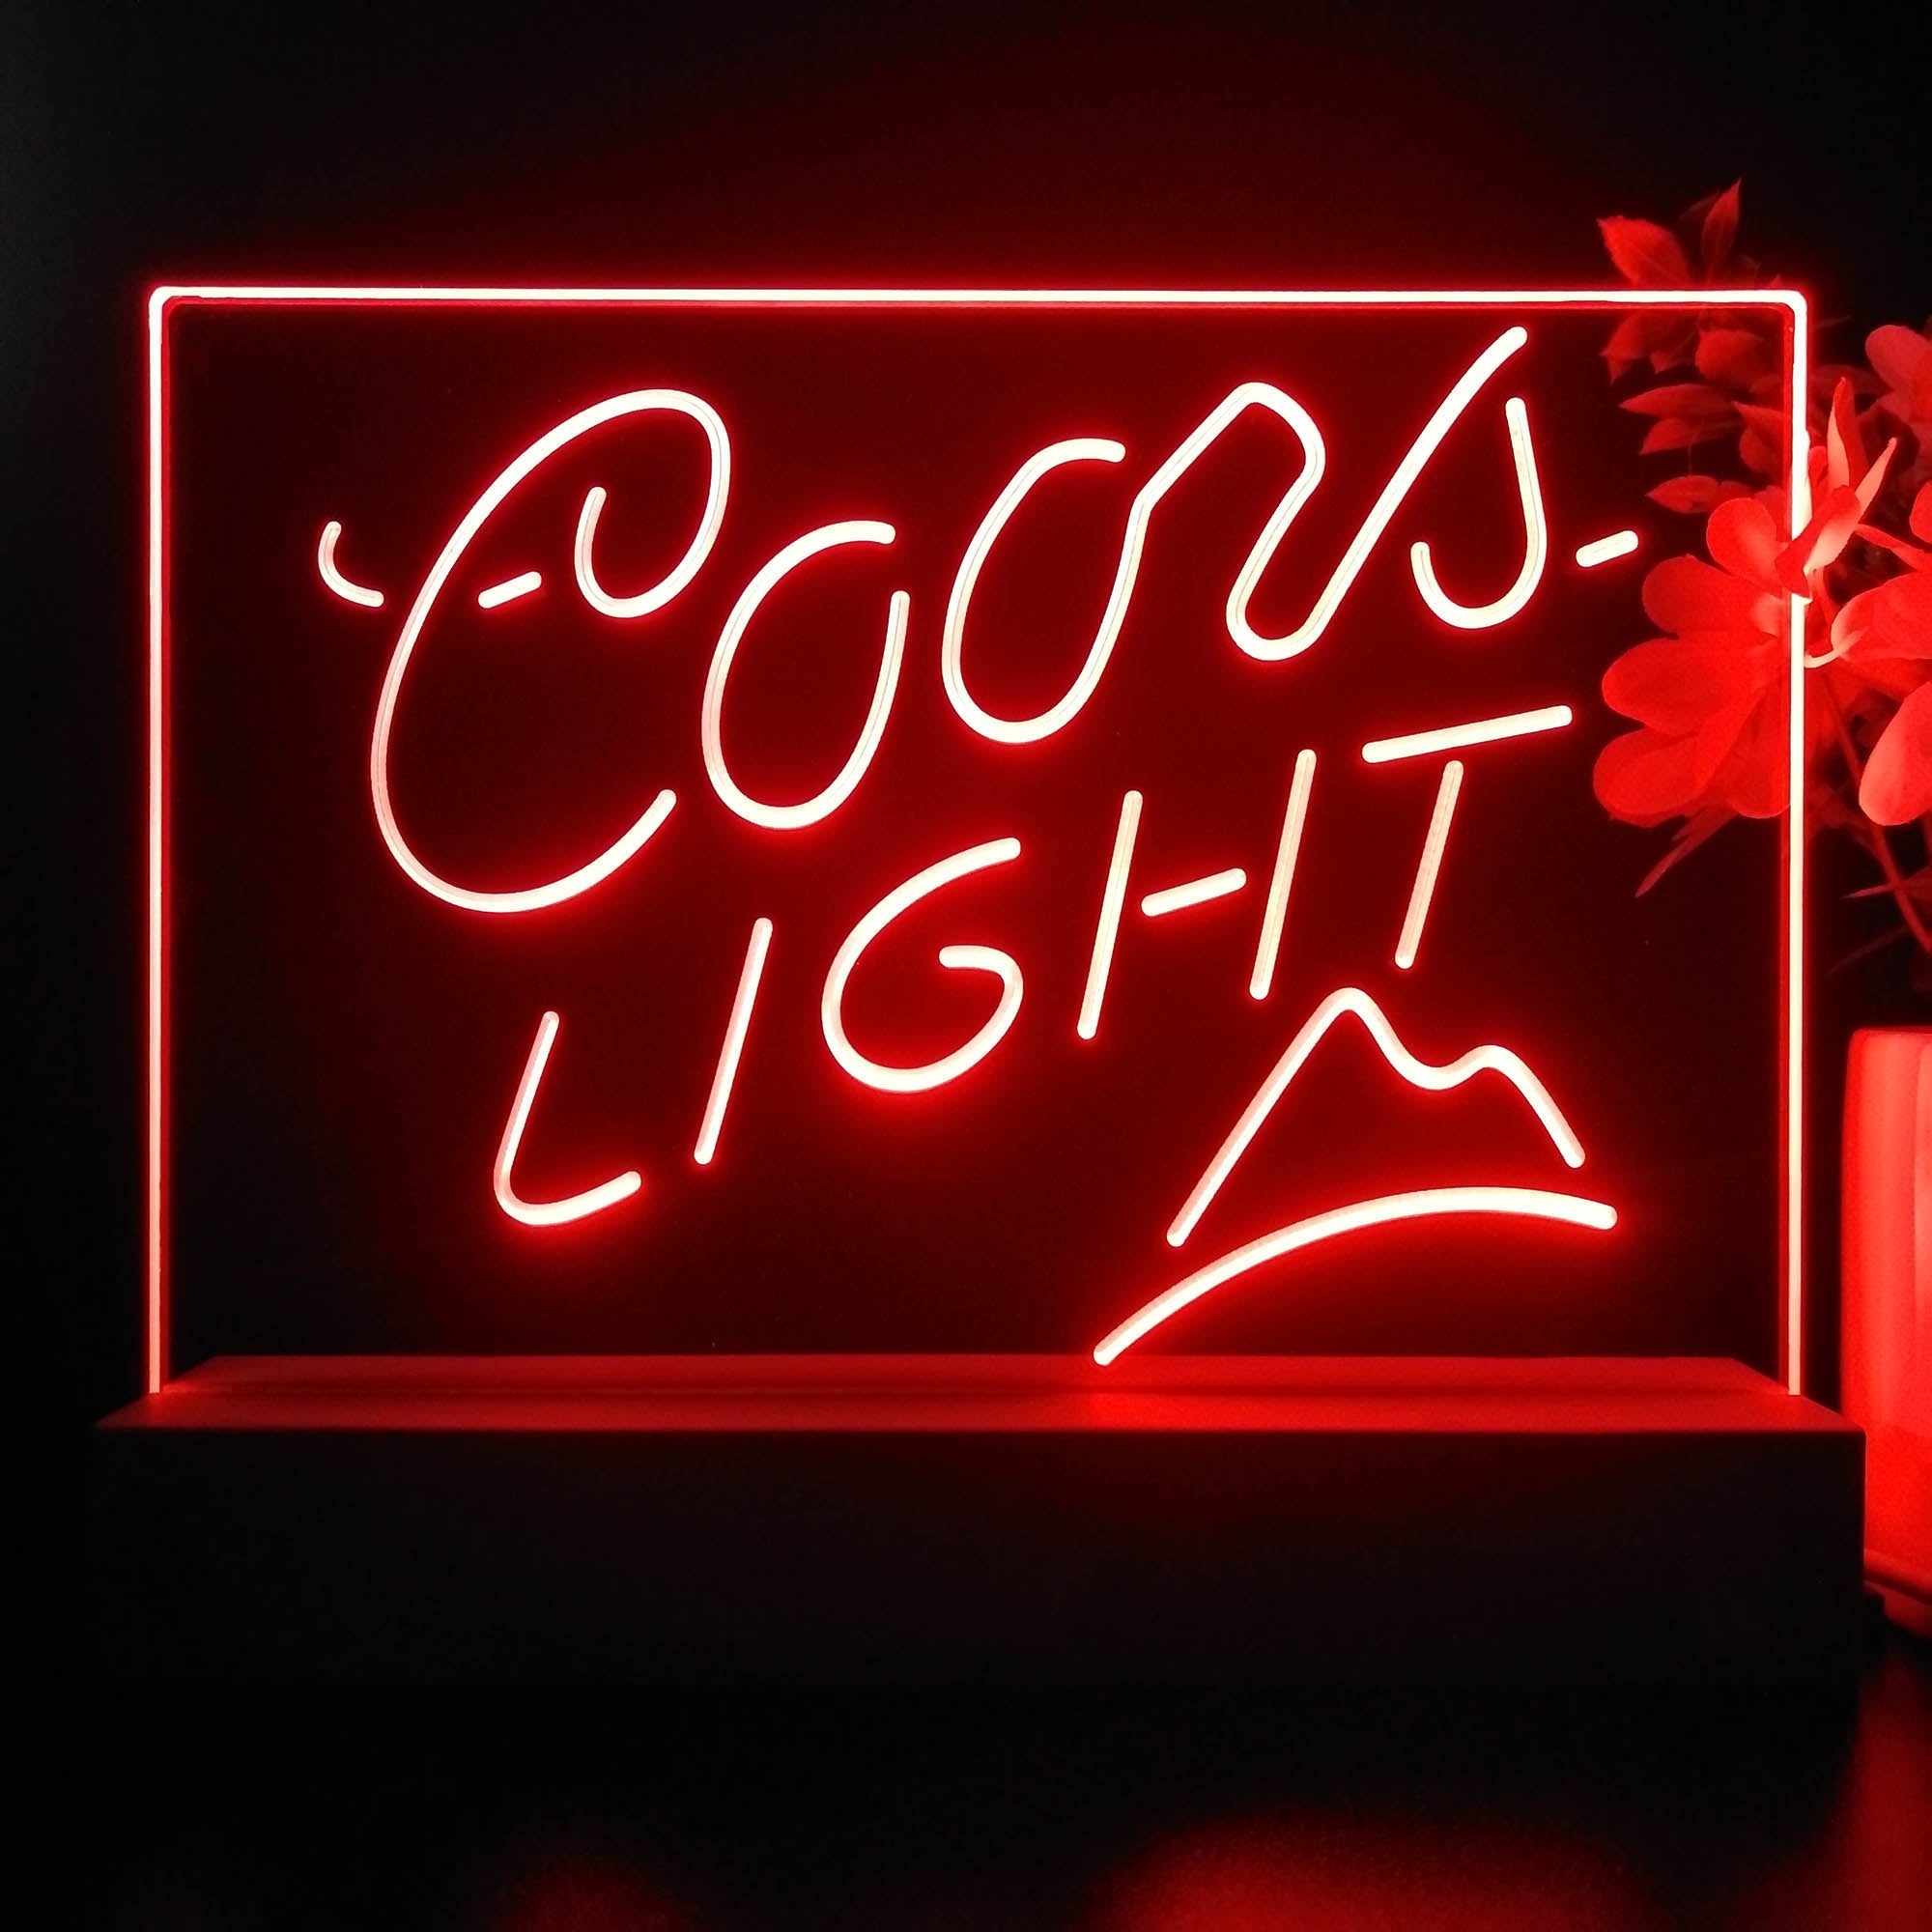 Coors Light Mountain Bar Neon Sign Pub Bar Lamp